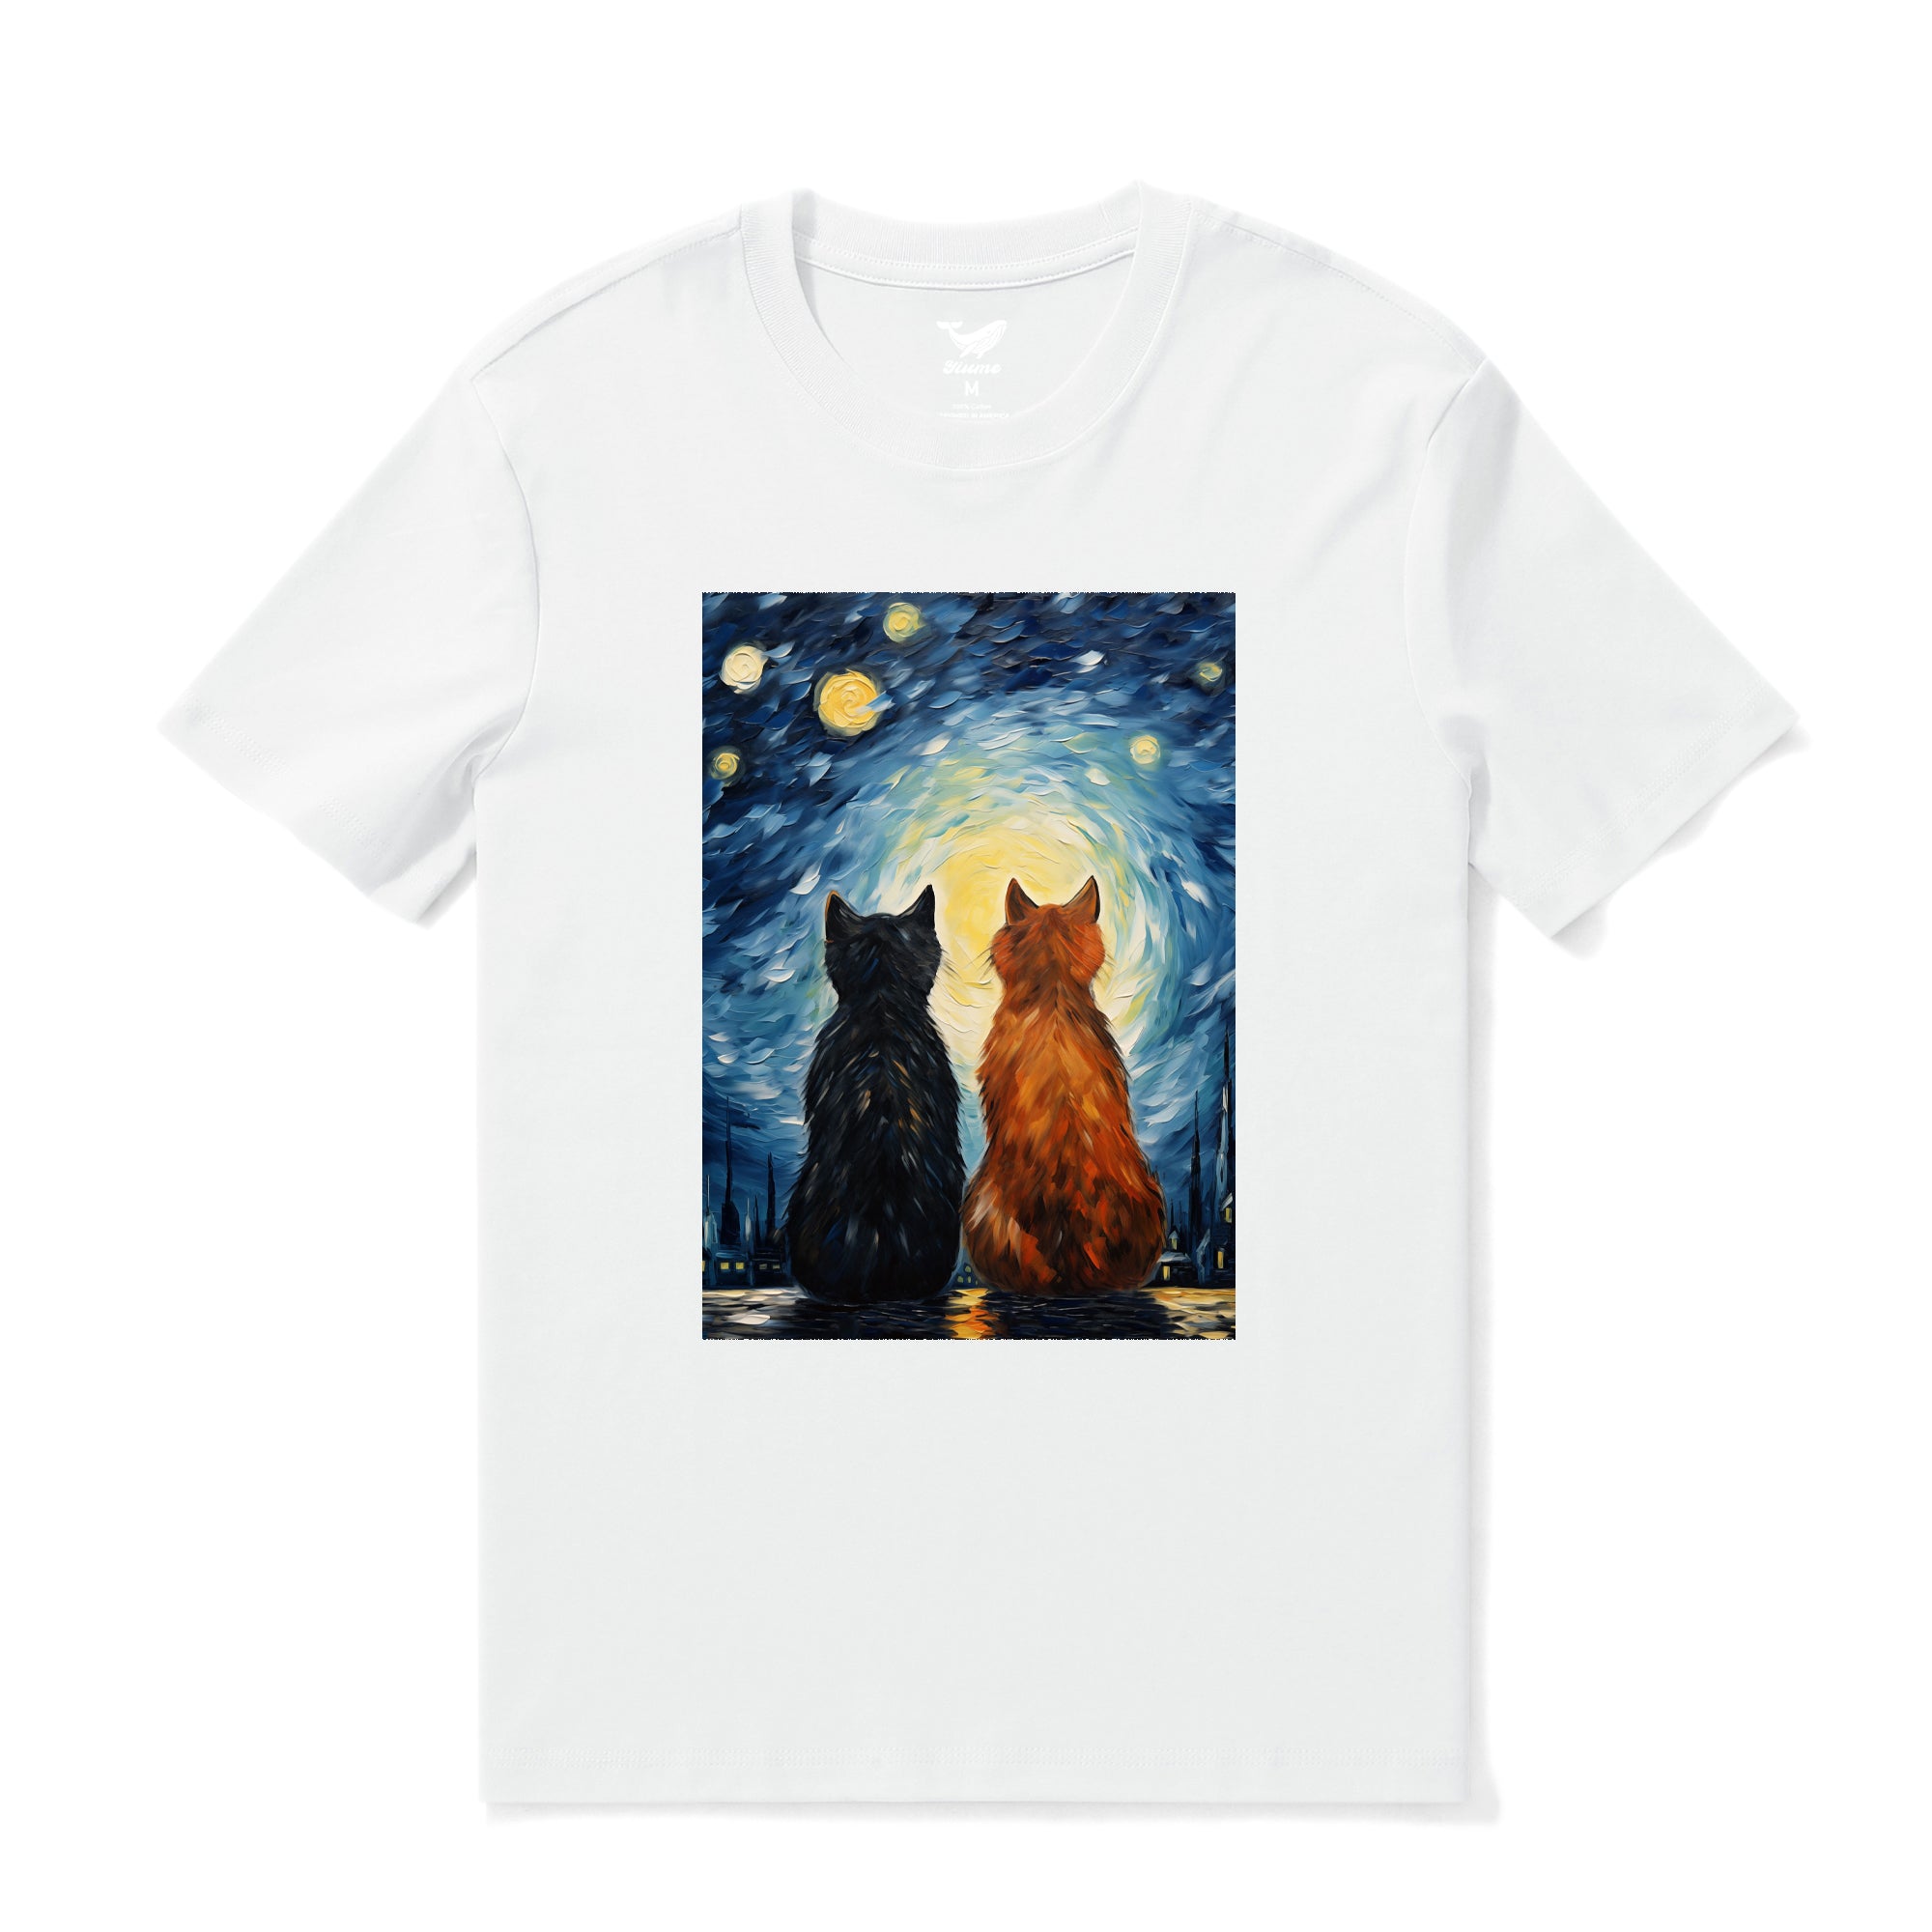 Tee-shirt hawaïen pour hommes Cats In Love Van Gogh Tee Crew Neck 100% Coton - BLANC